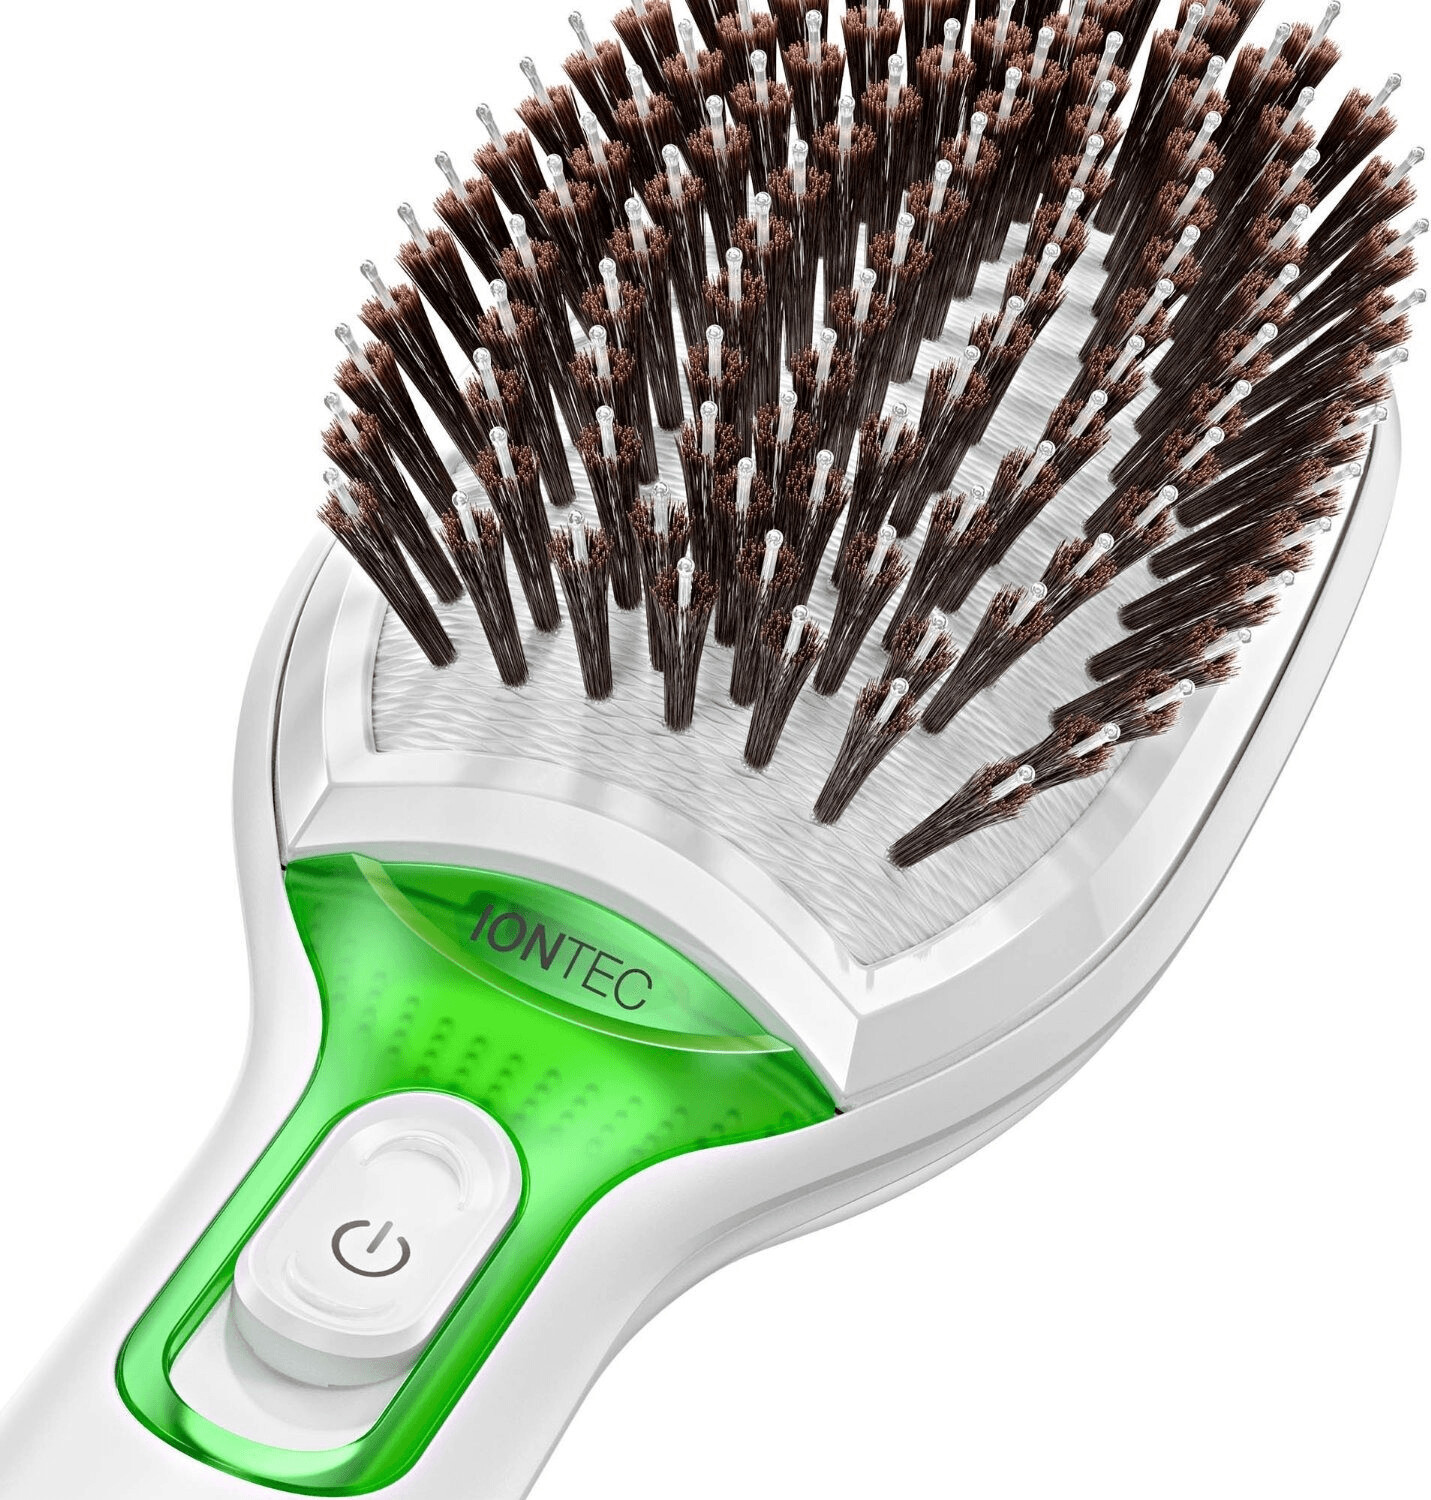 Braun Personal Care BR750 Hair € Preisvergleich ab Satin | 7 Brush 30,99 bei